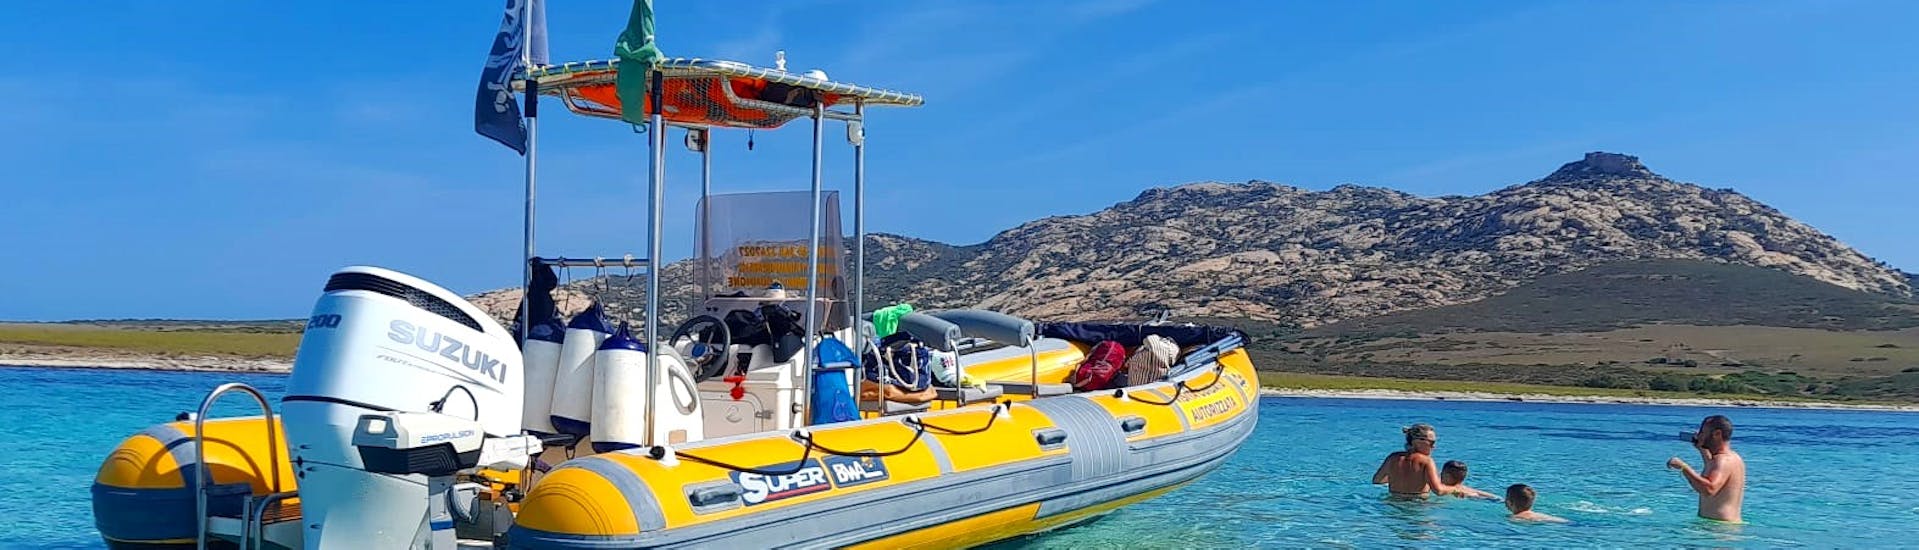 Balade privée en bateau Stintino - Parc national de l'Asinara.